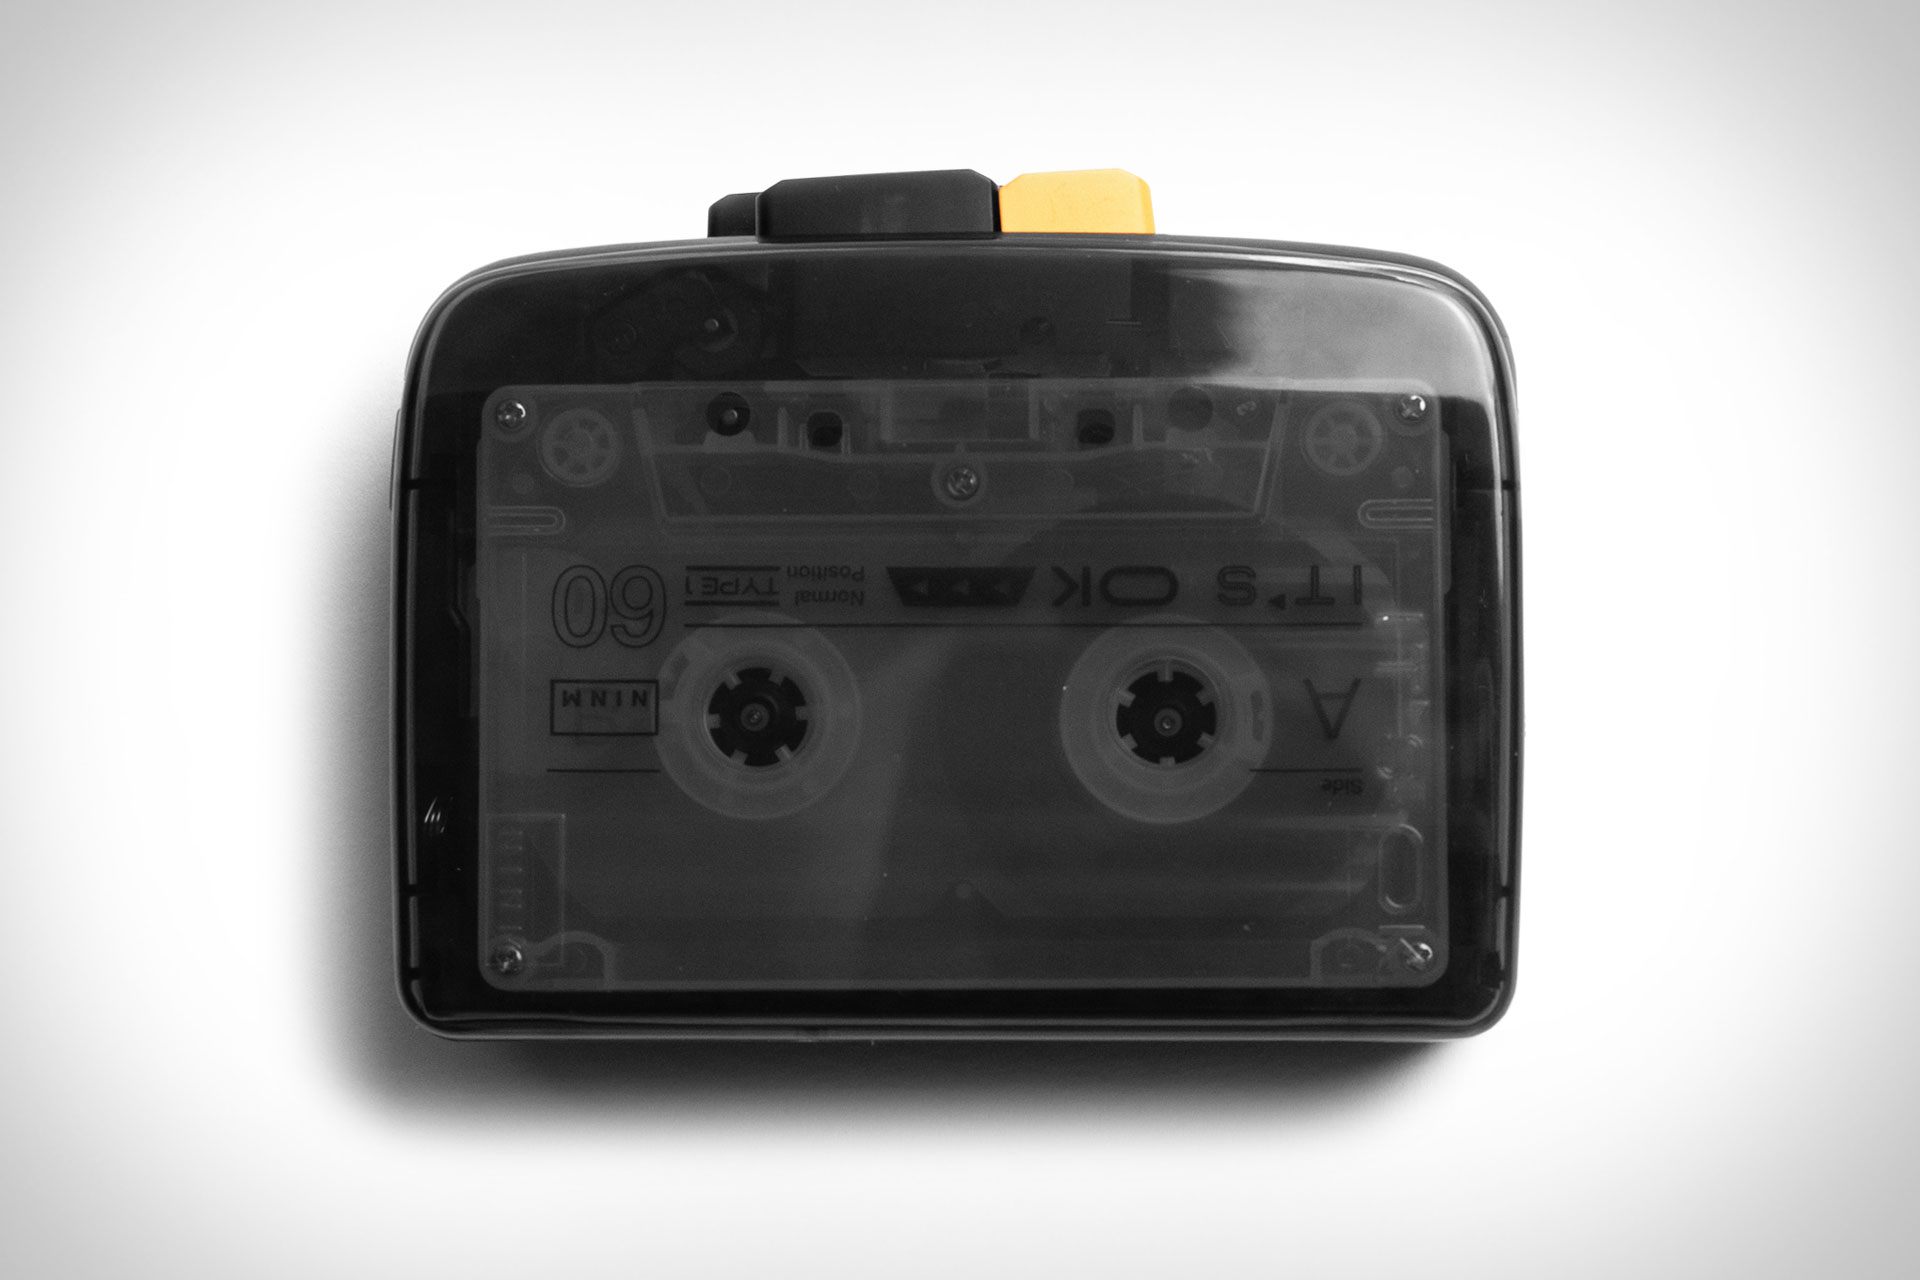 cassette player